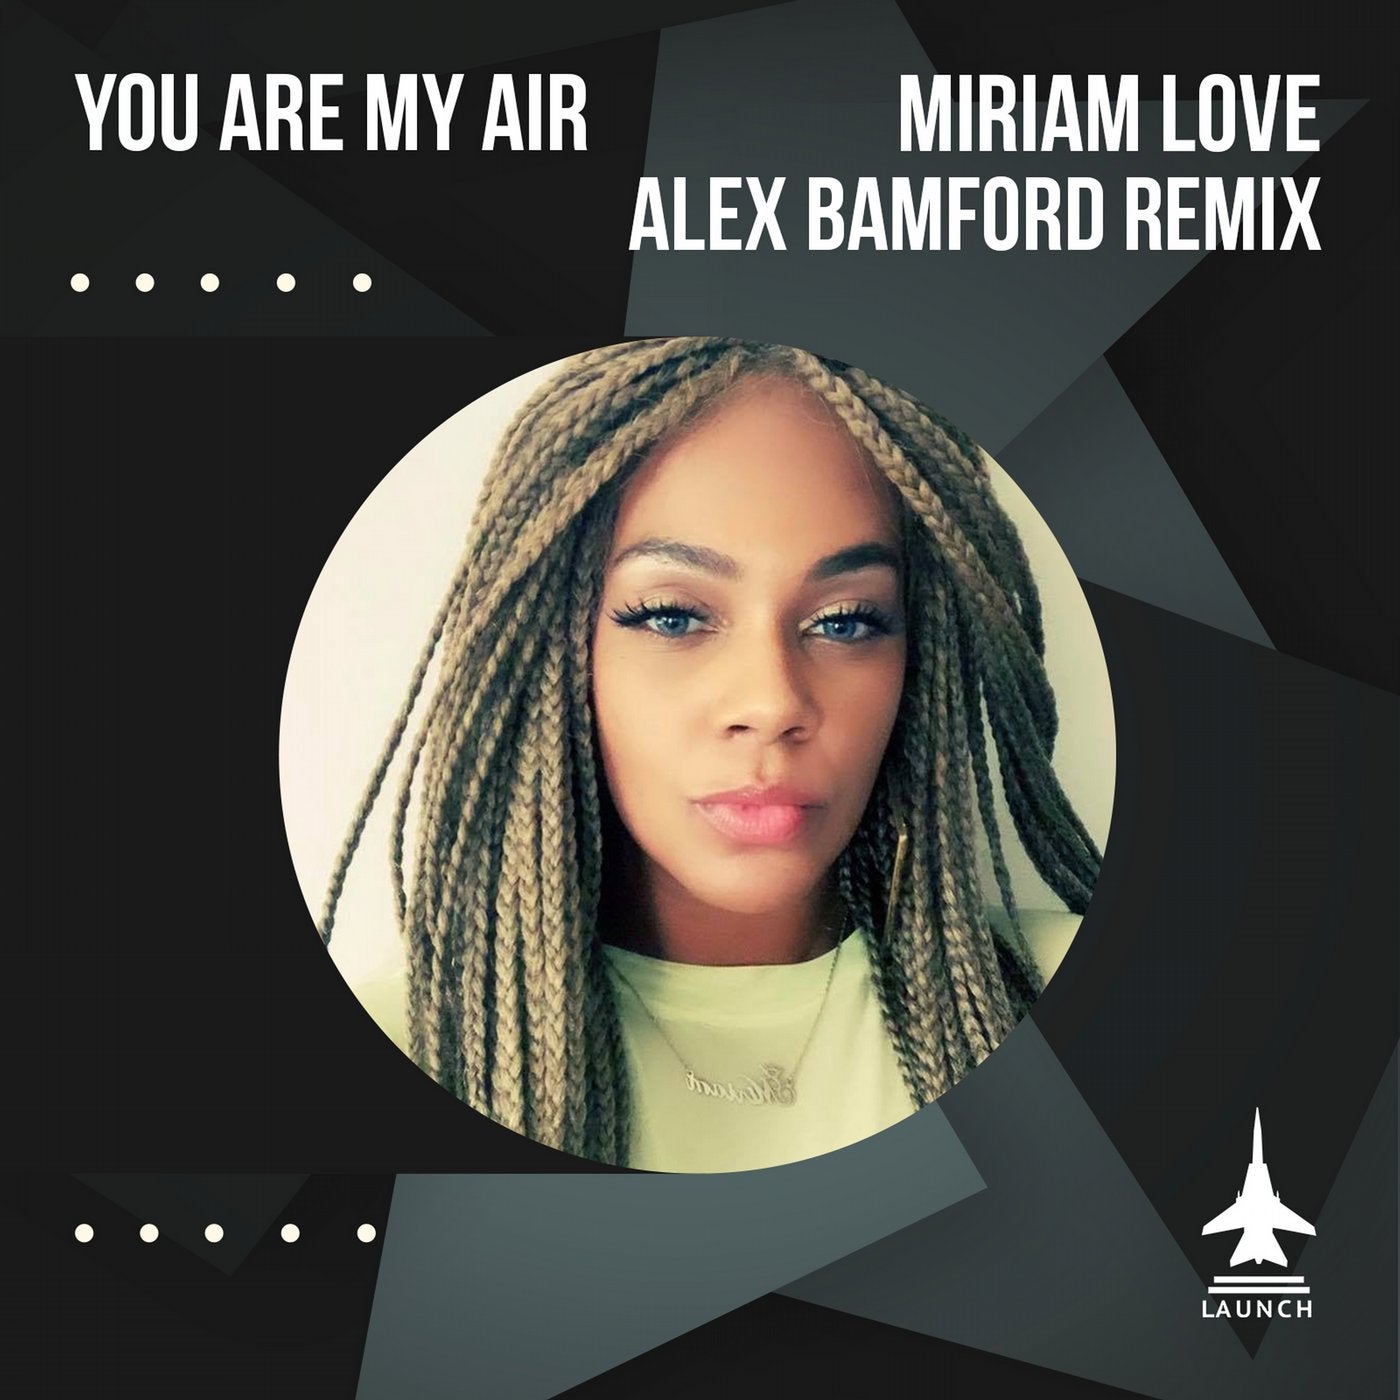 You Are My Air (Alex Bamford Mixes)